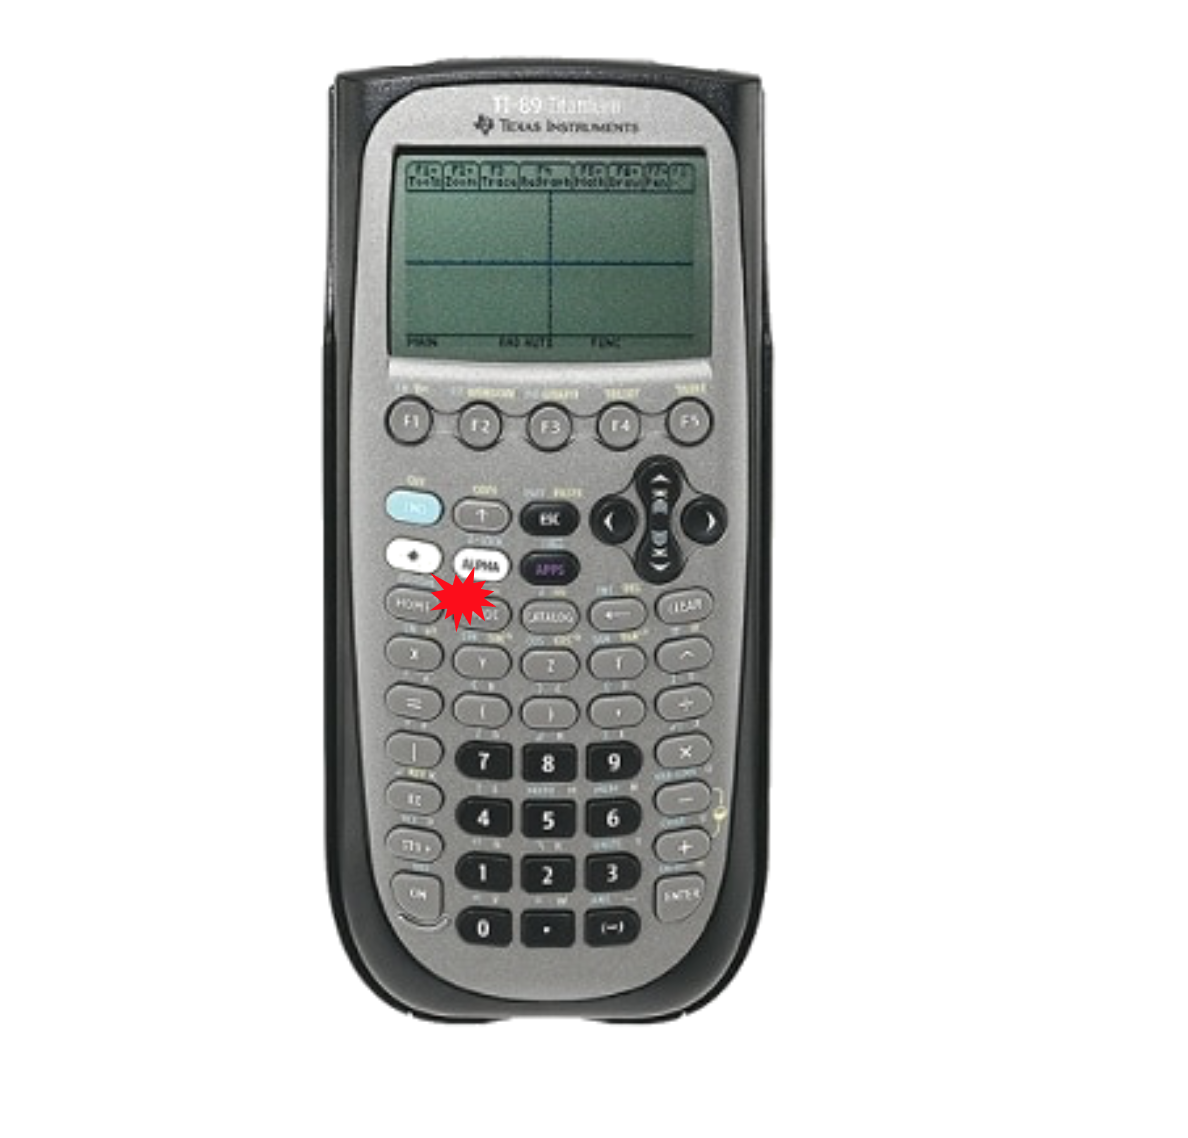 Casio Scientific Calculator Online With Fractions